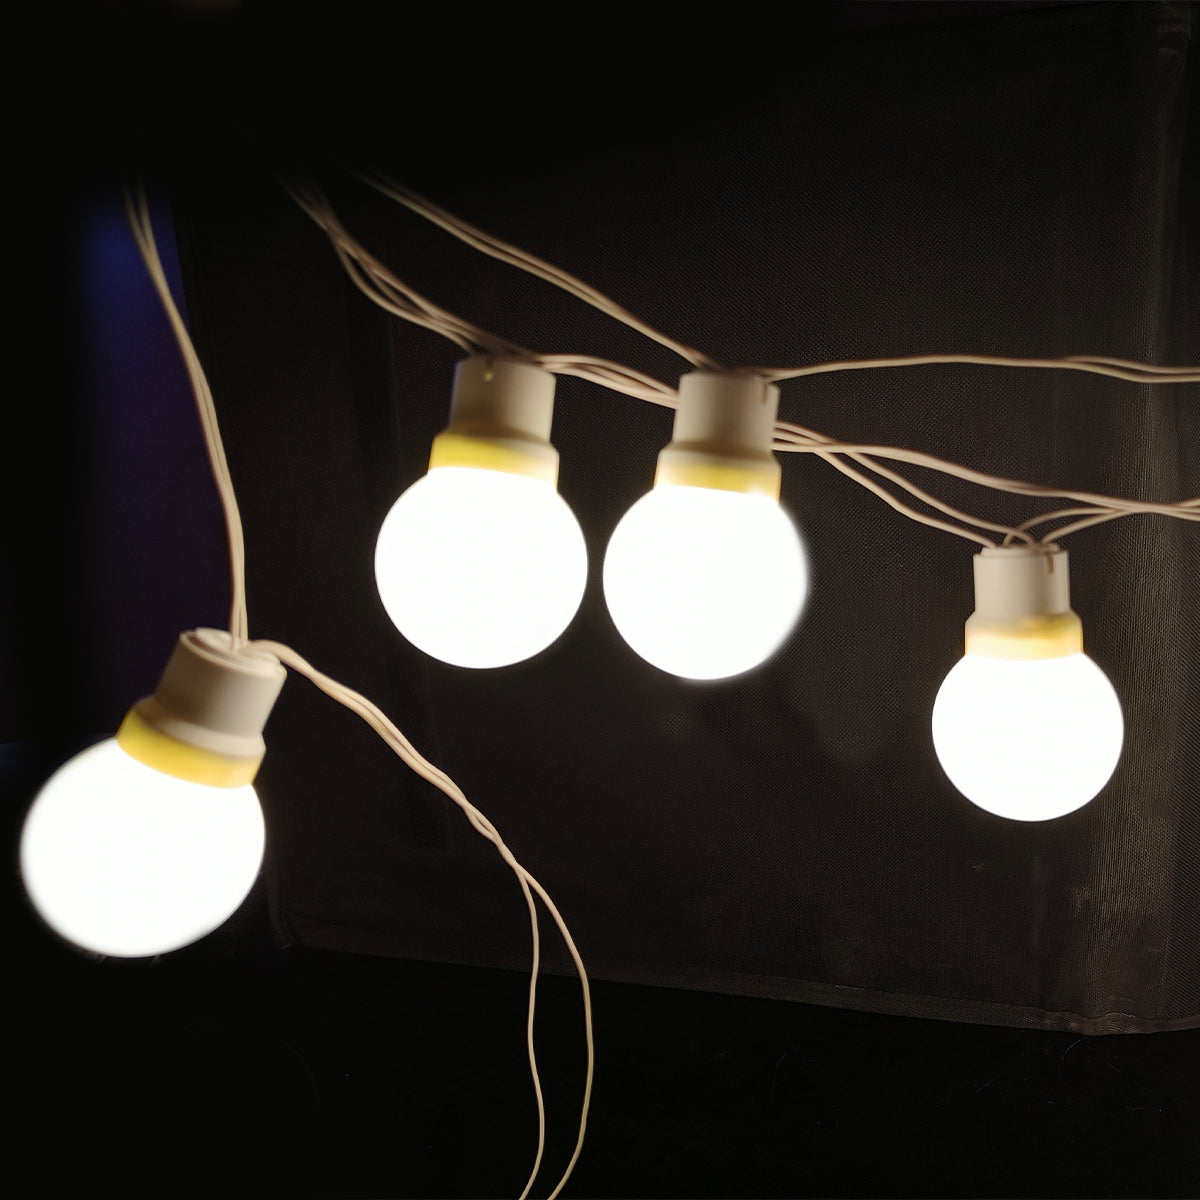 20 LED Shatterproof Bulb String Light, Waterproof Indoor Outdoor Lights for Home Decoration(22 Feet)